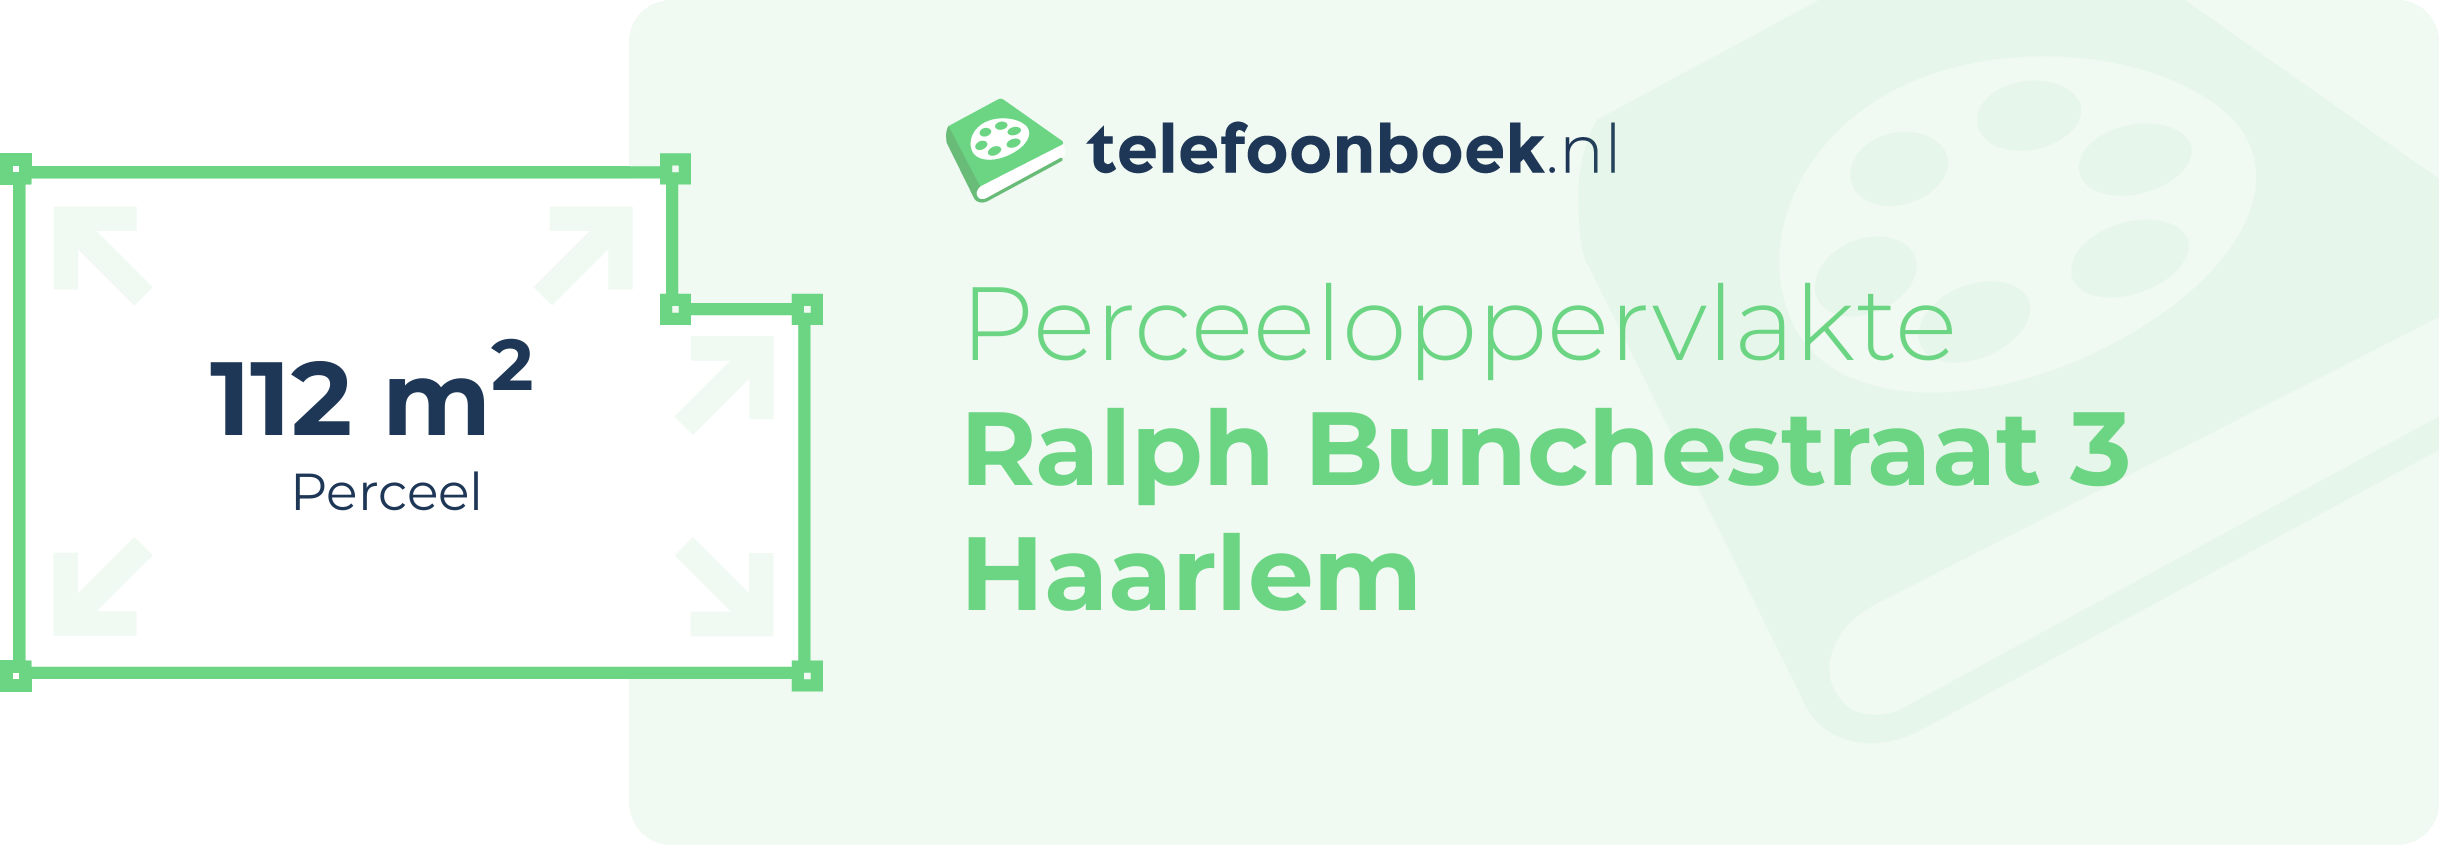 Perceeloppervlakte Ralph Bunchestraat 3 Haarlem